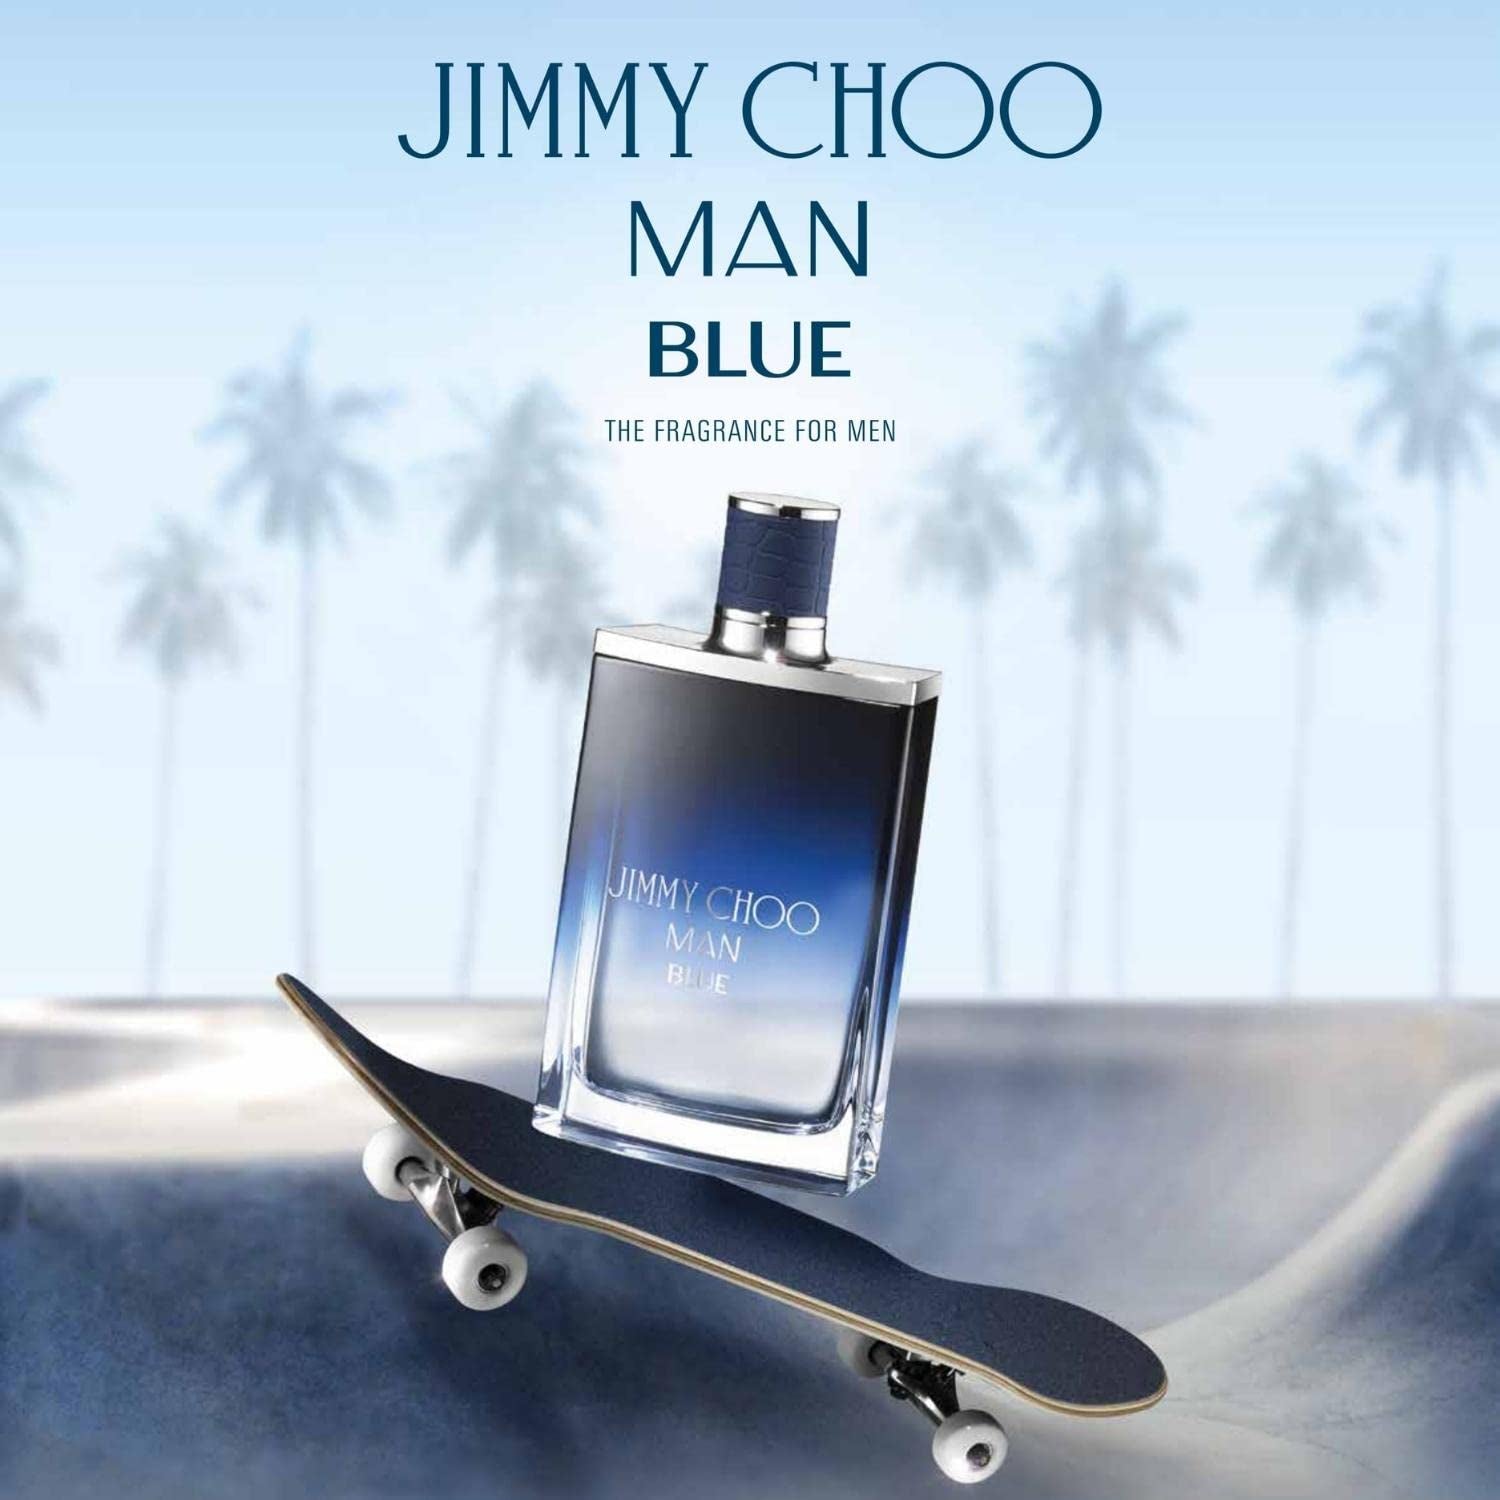 JIMMY CHOO MAN BLUE 1.7oz Eau de Toilette Spray